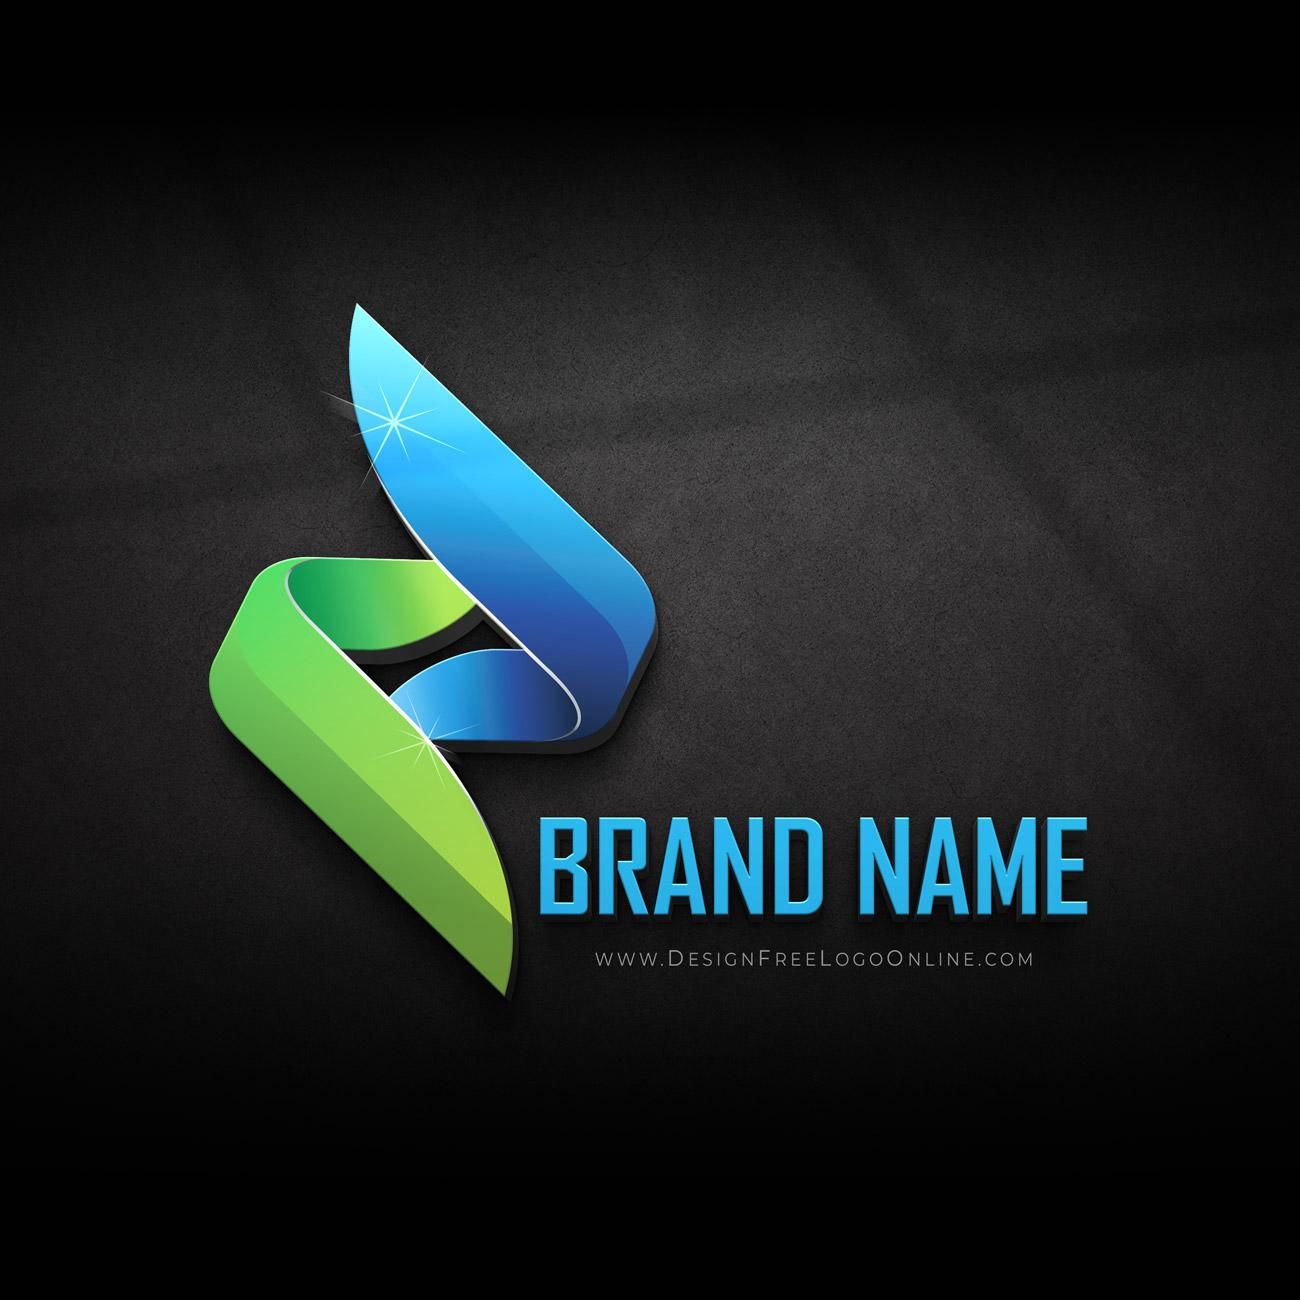 https://www.designfreelogoonline.com/logoshop/design-free-logo-3d-colour-sphere-online-logo-template/